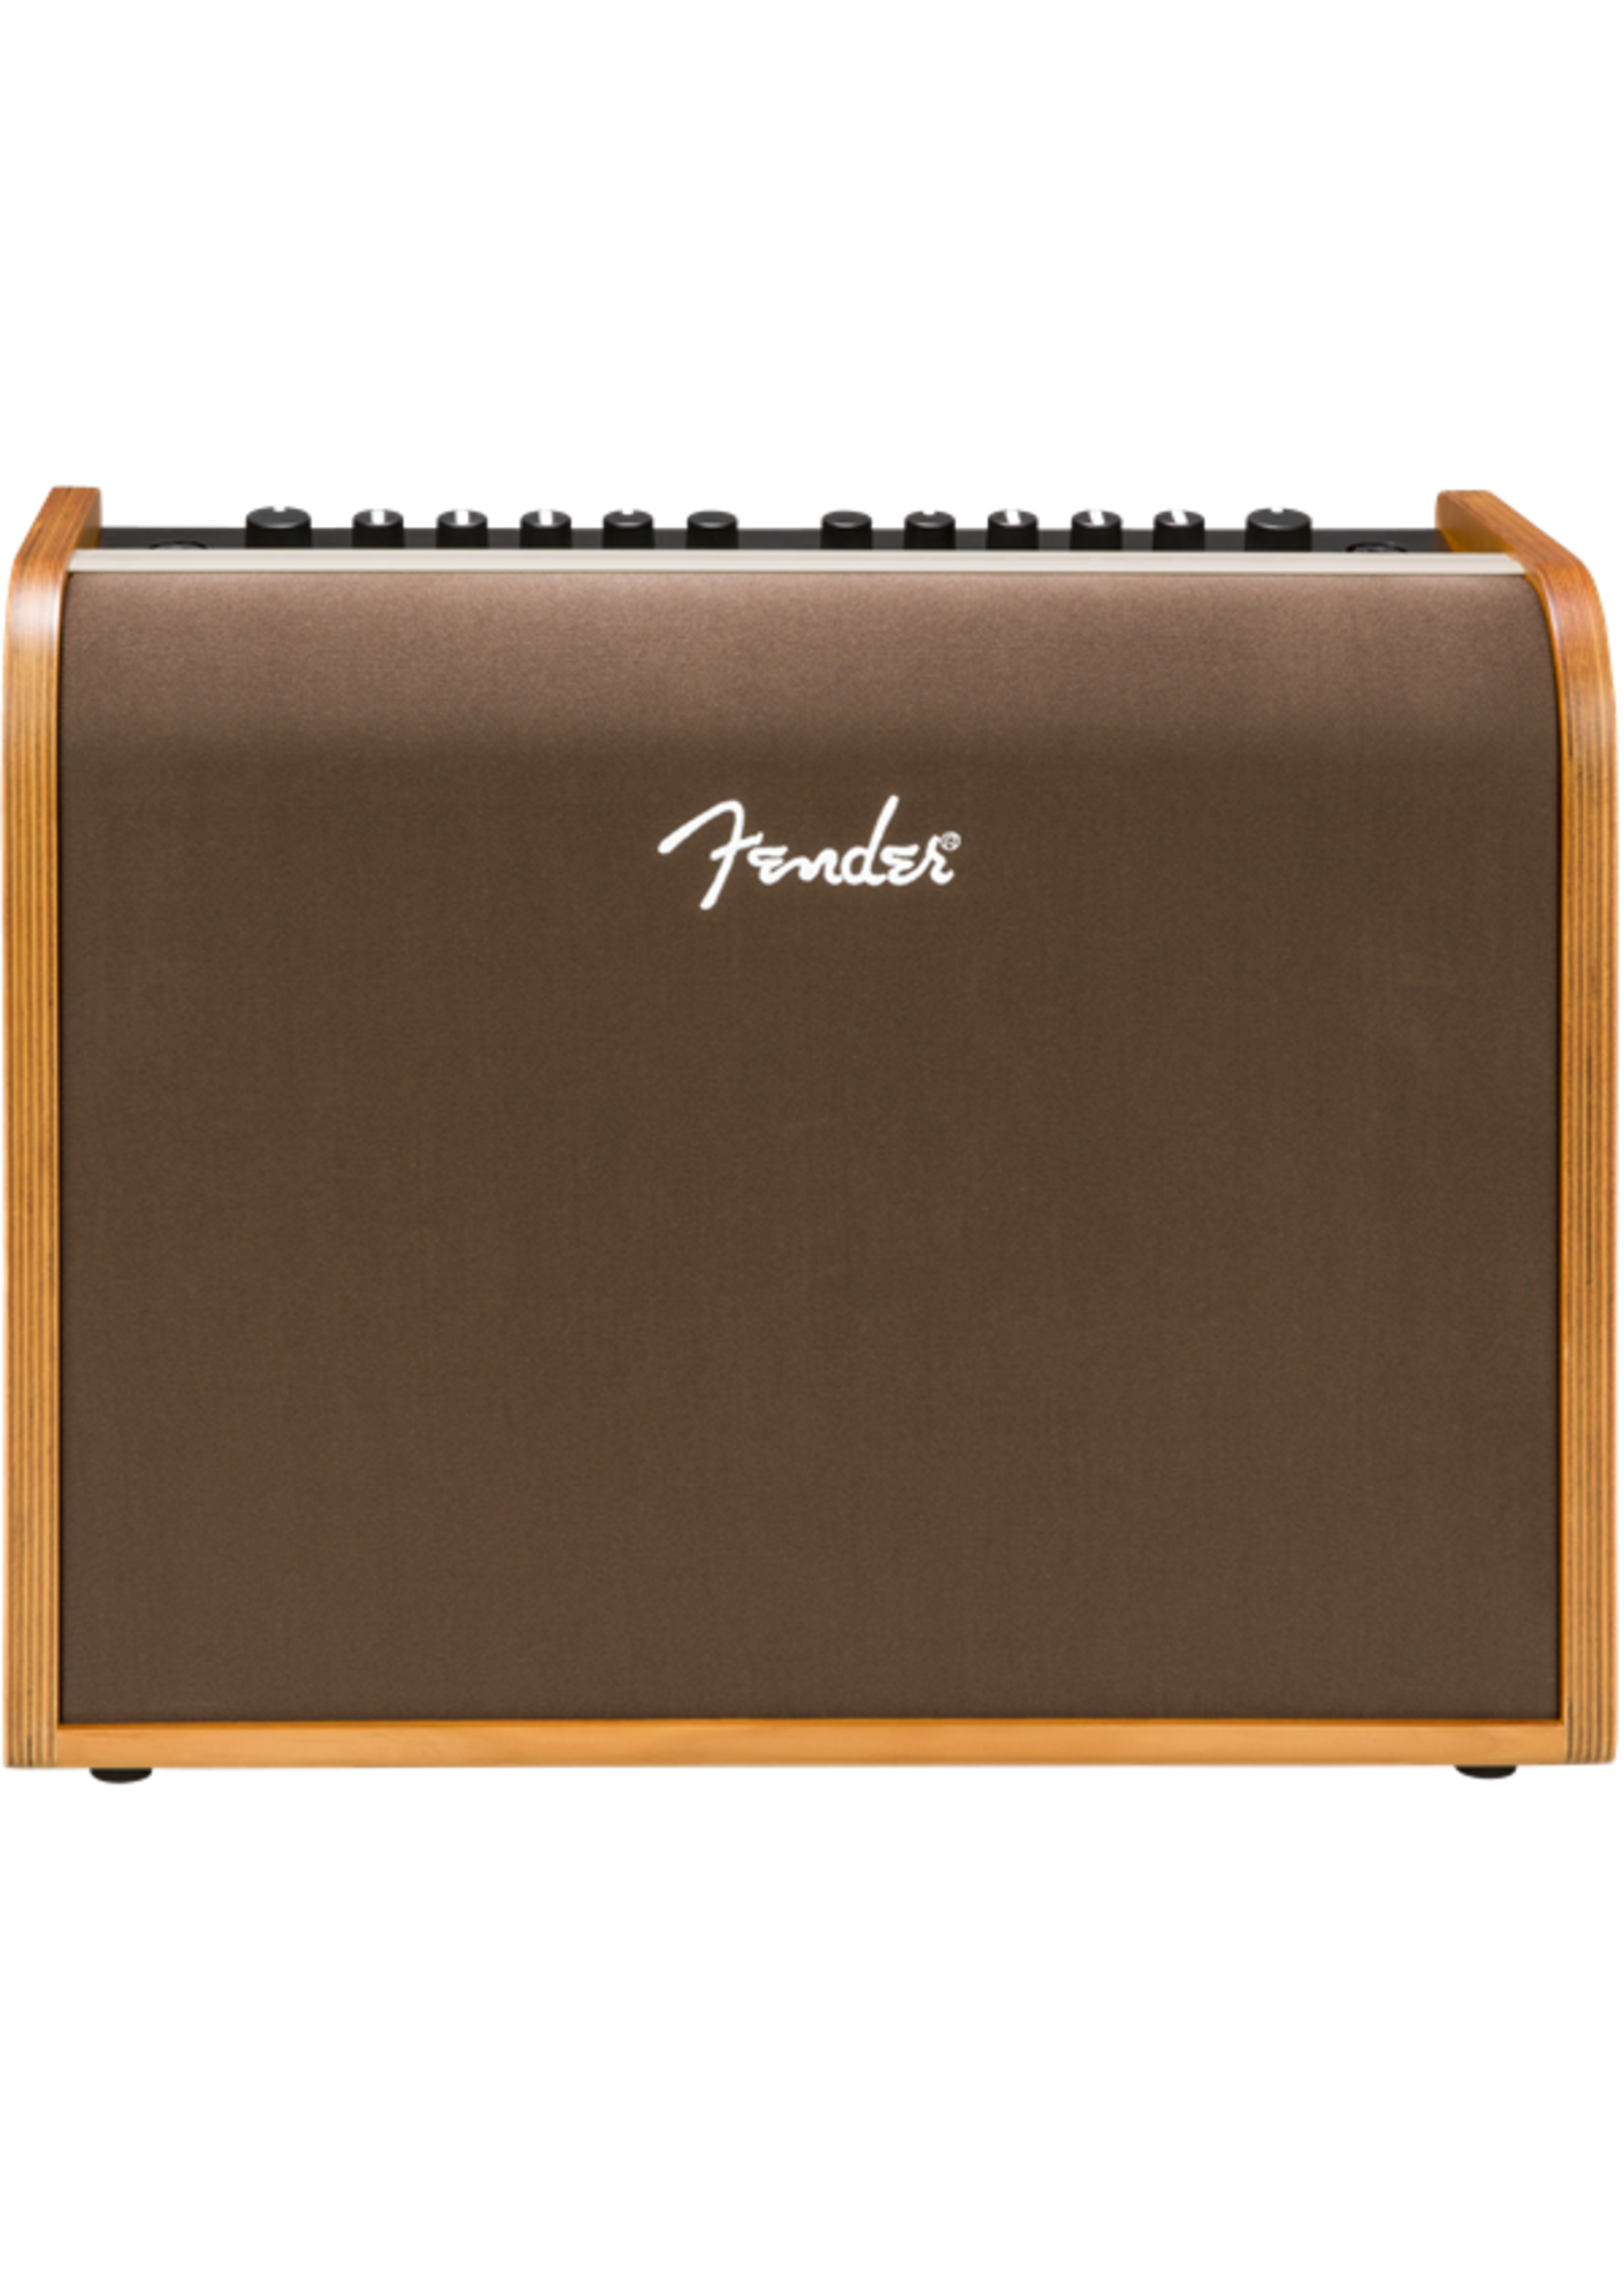 Fender Fender Amplifier Acoustic 100